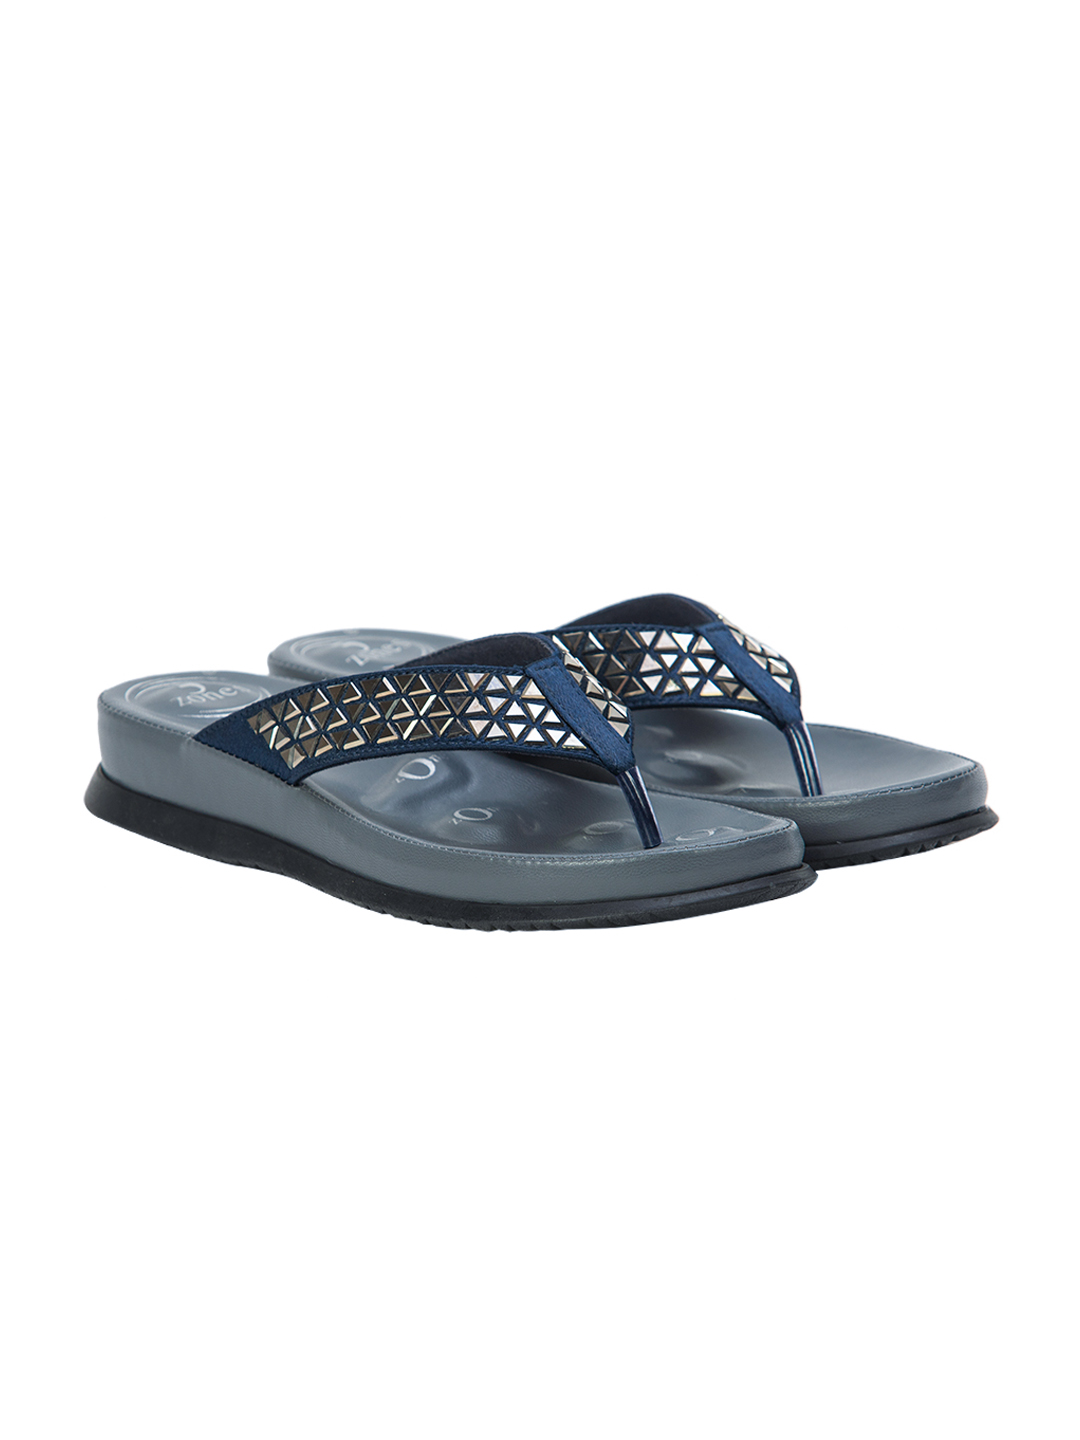 Buy Von Wellx Germany Comfort Beam Blue Slippers Online in Bangalore